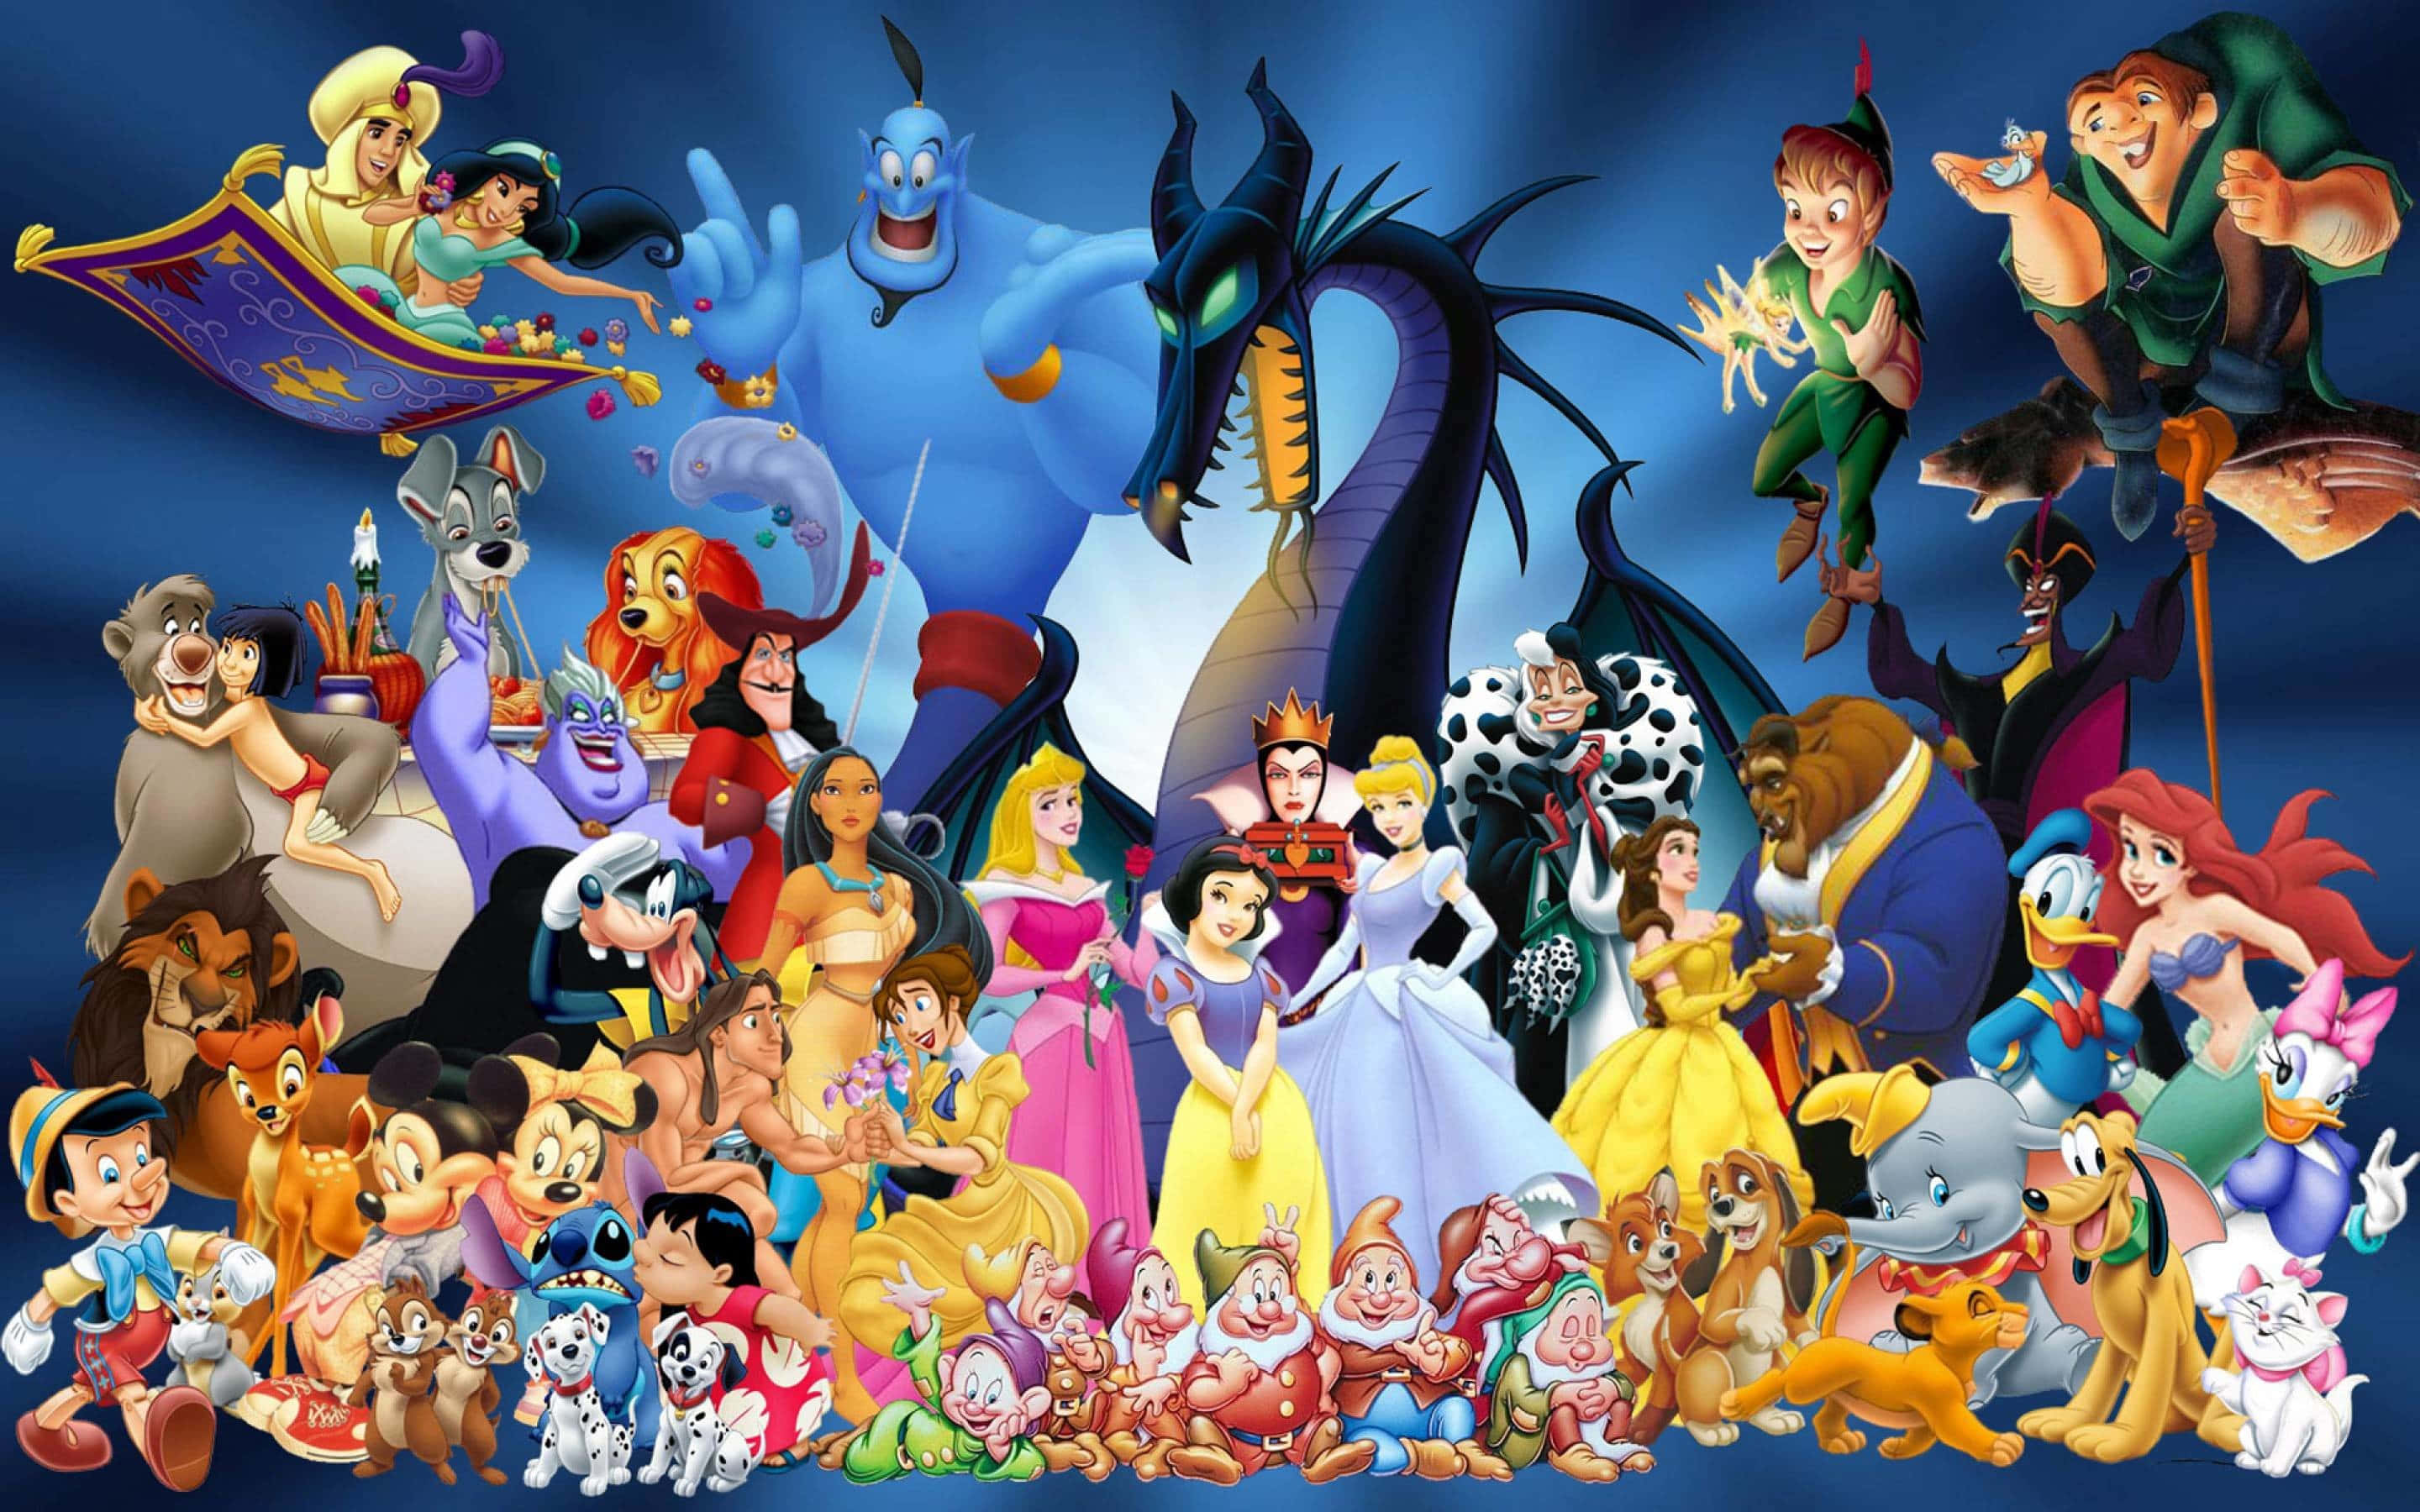 Magical Disney Halloween Night